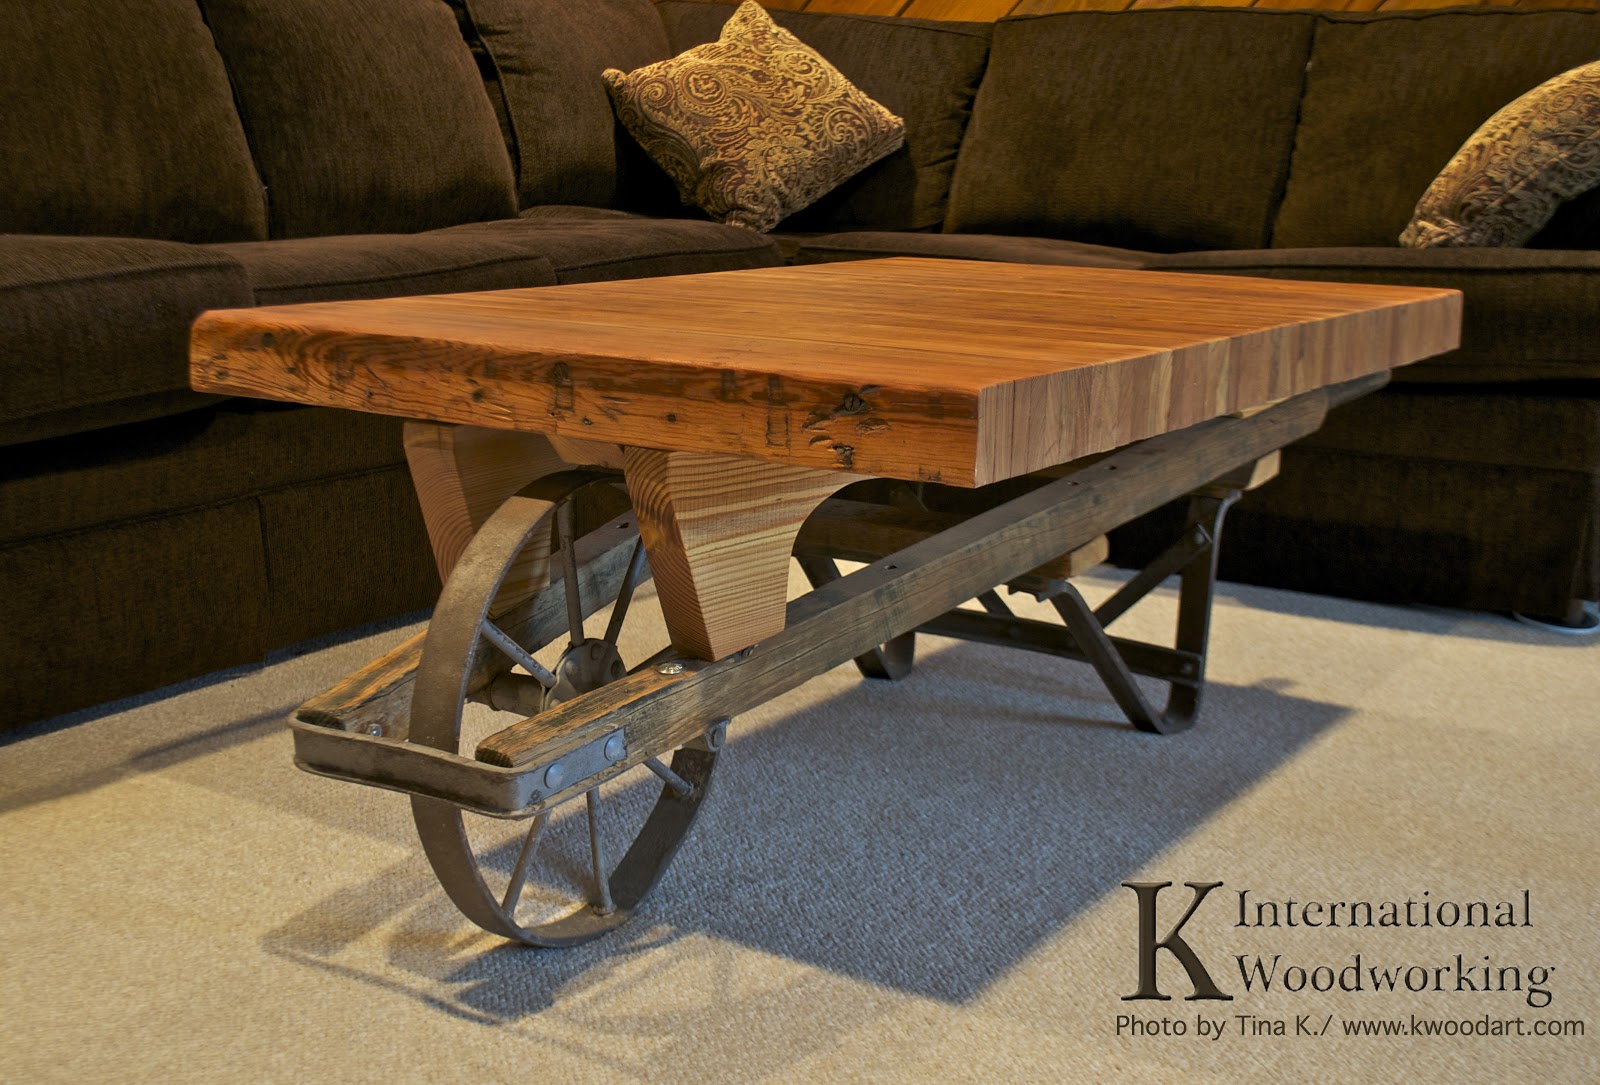 K International Woodworking: Wheelbarrow Coffee Table